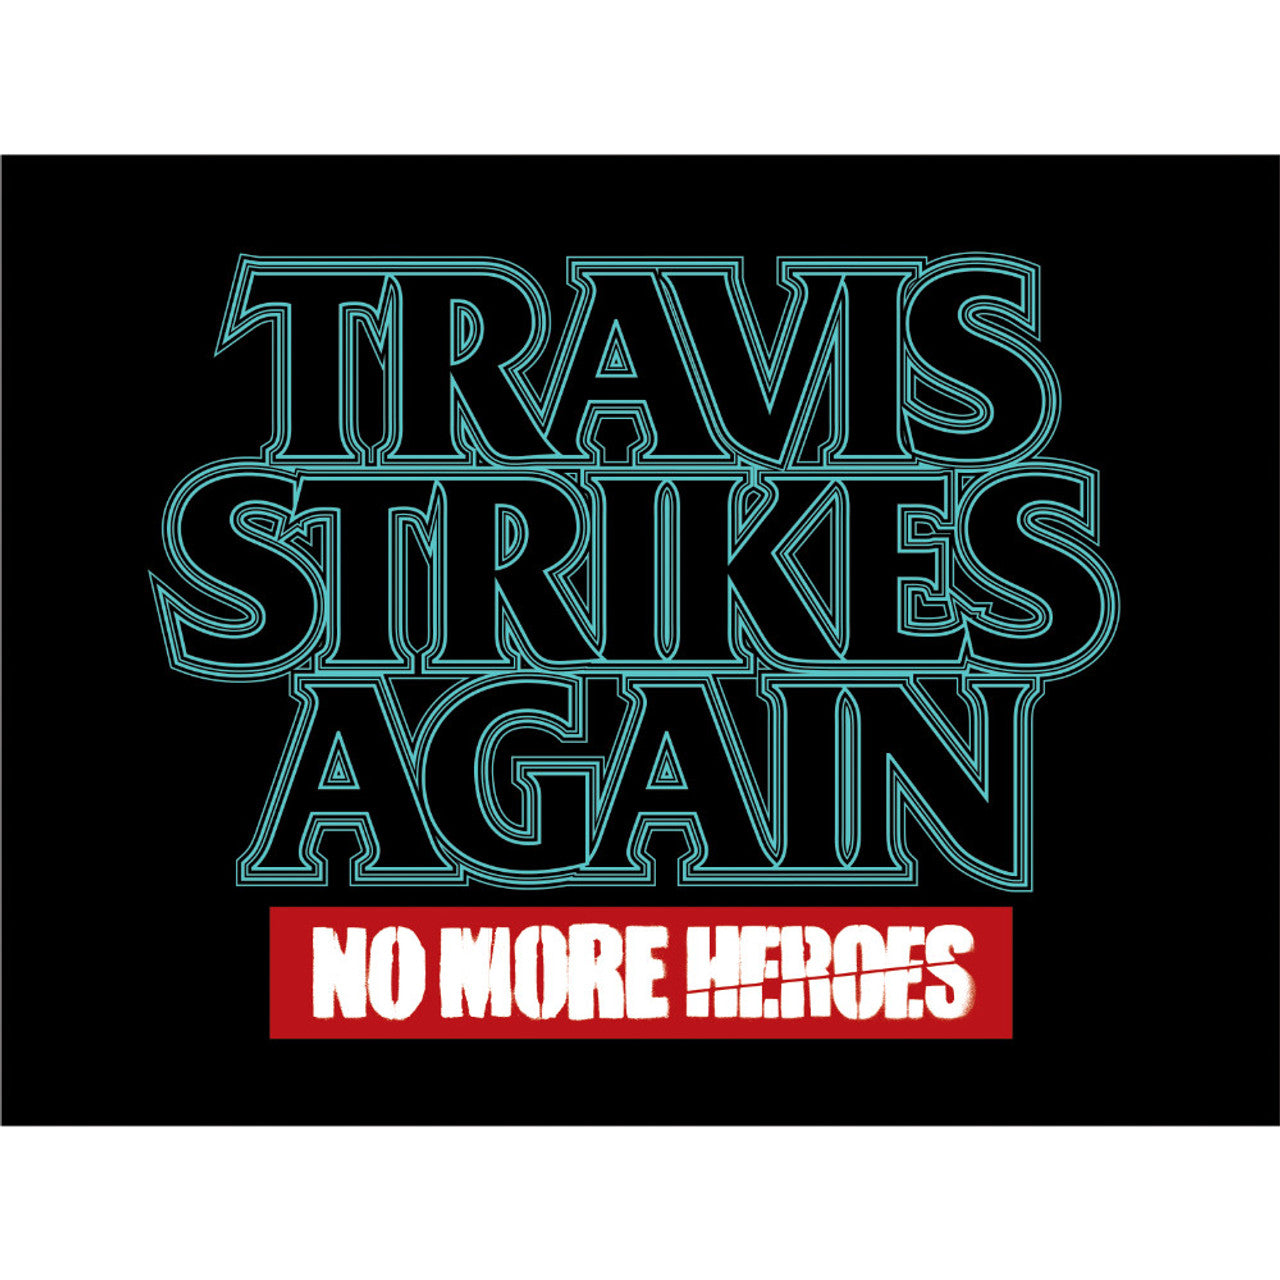 Nintendo - Travis Strikes Again: No More Heroes - Switch